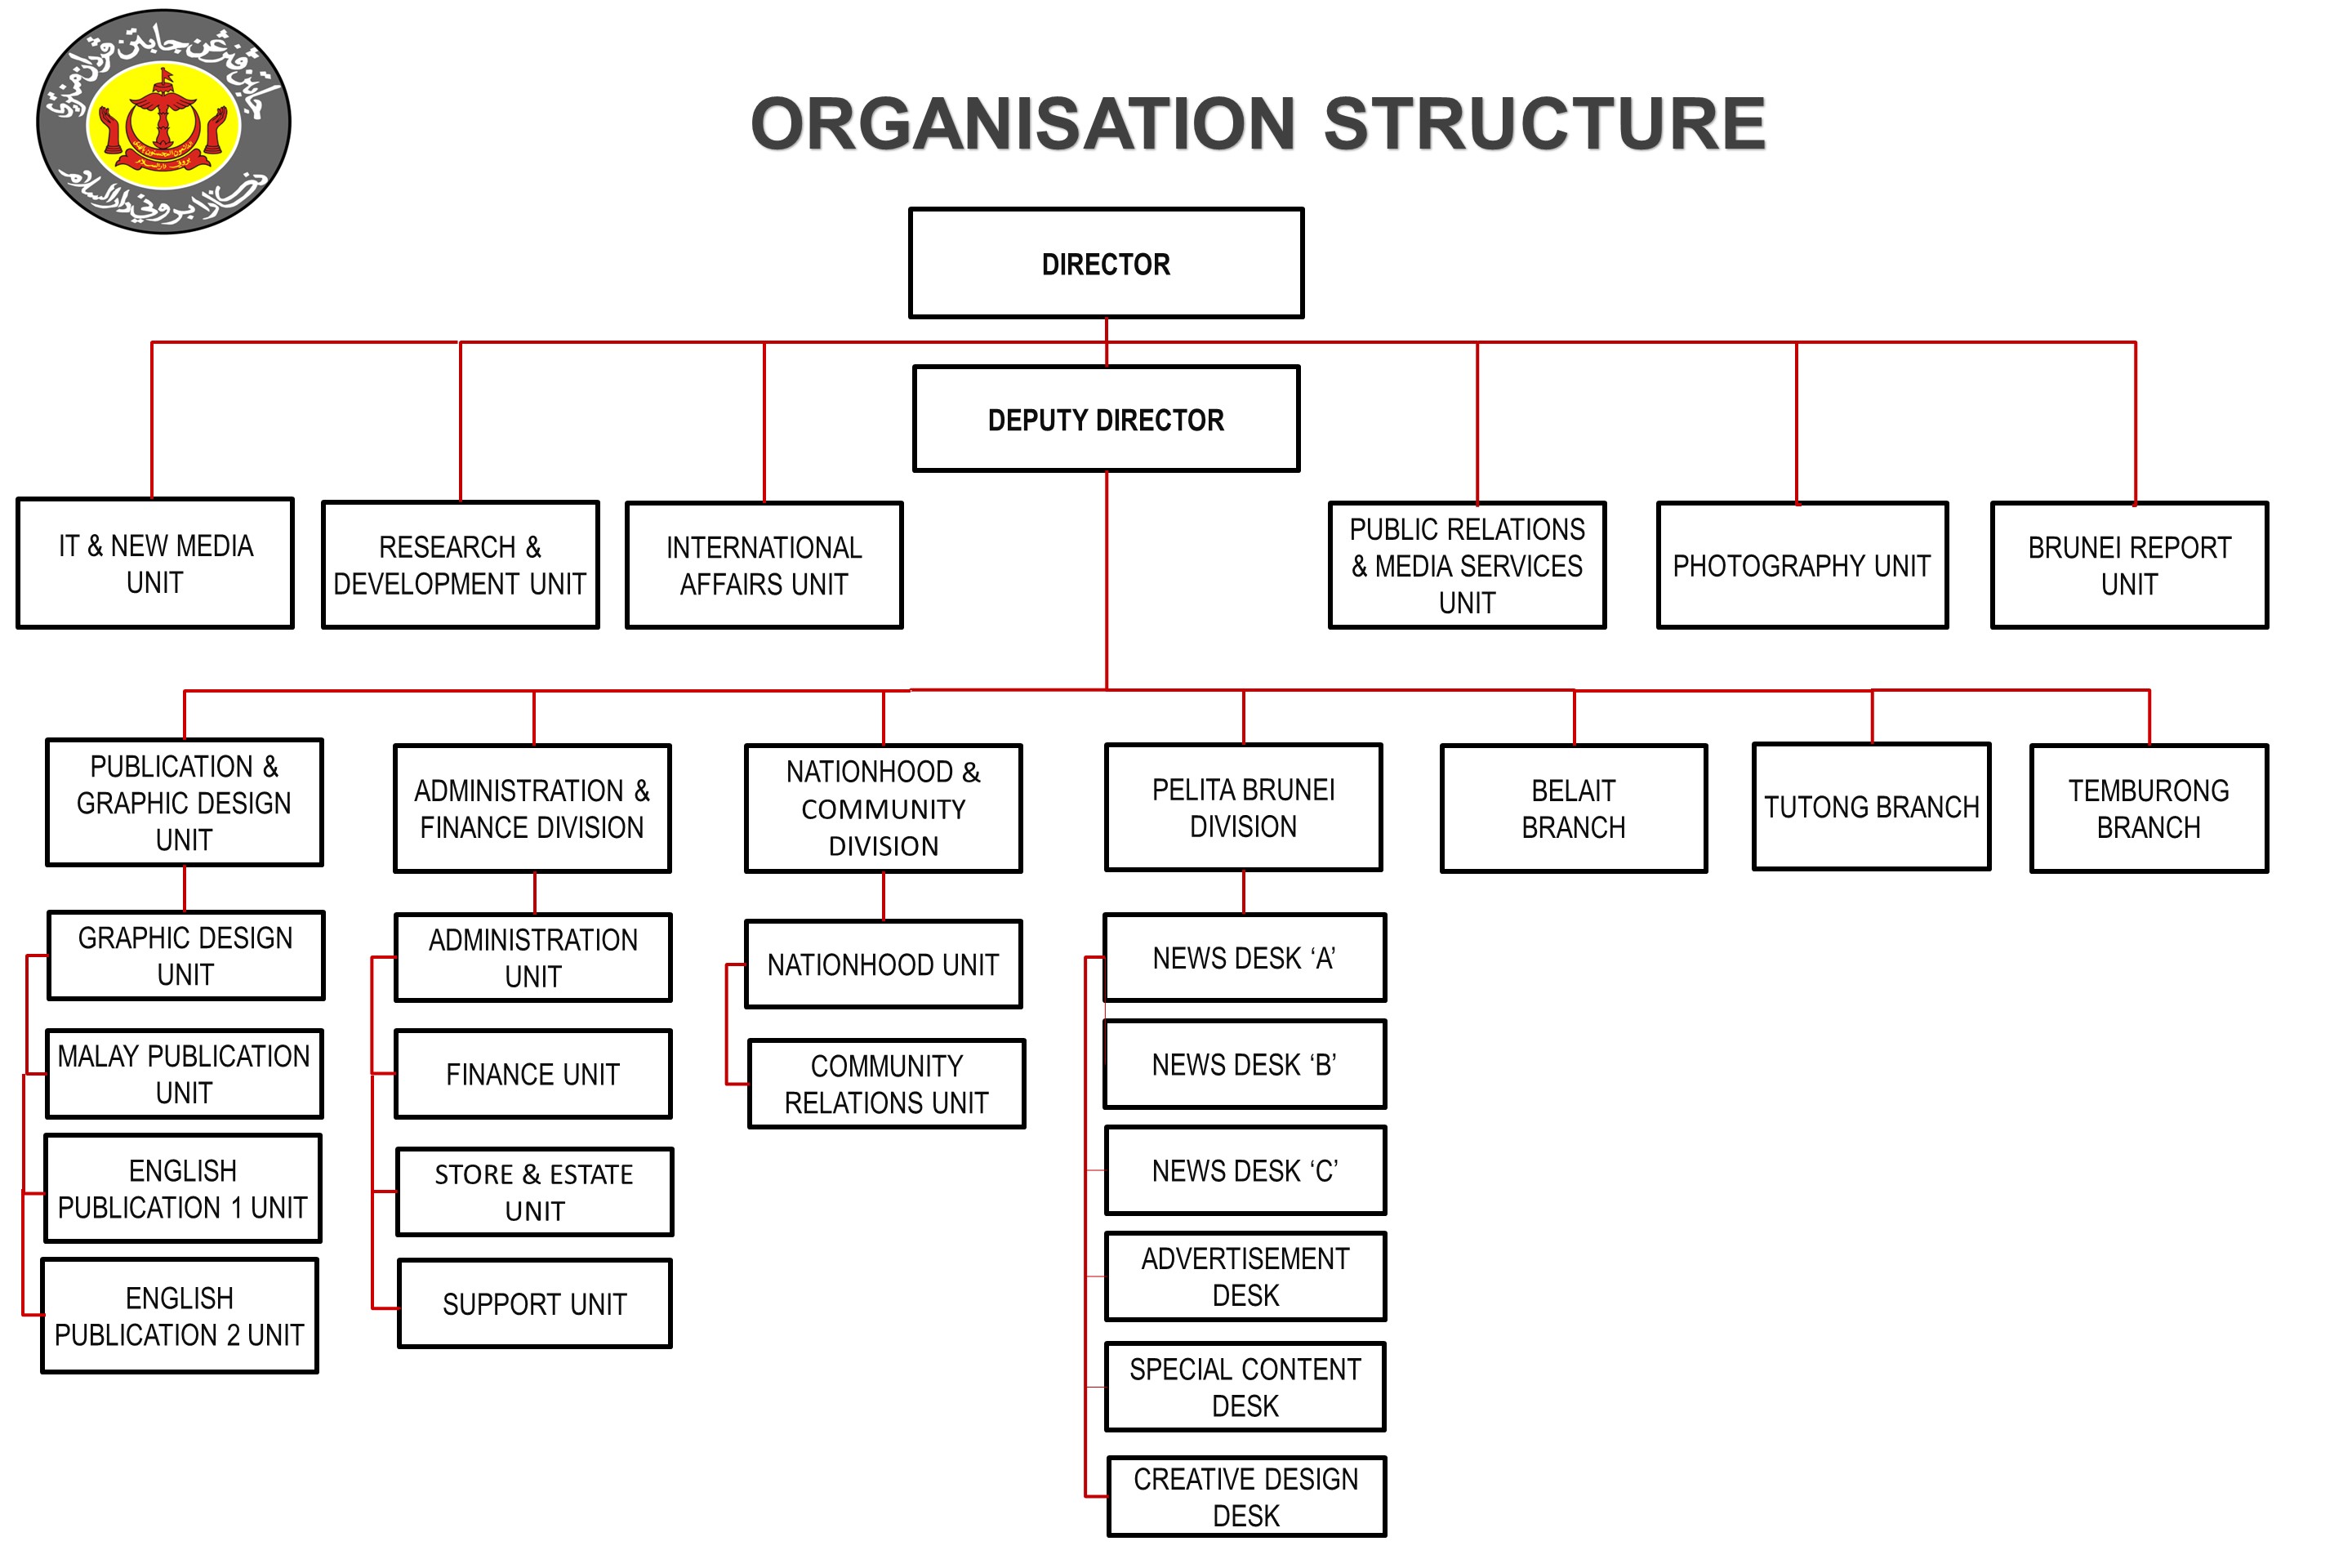 Attorney General S Department Organisation Chart